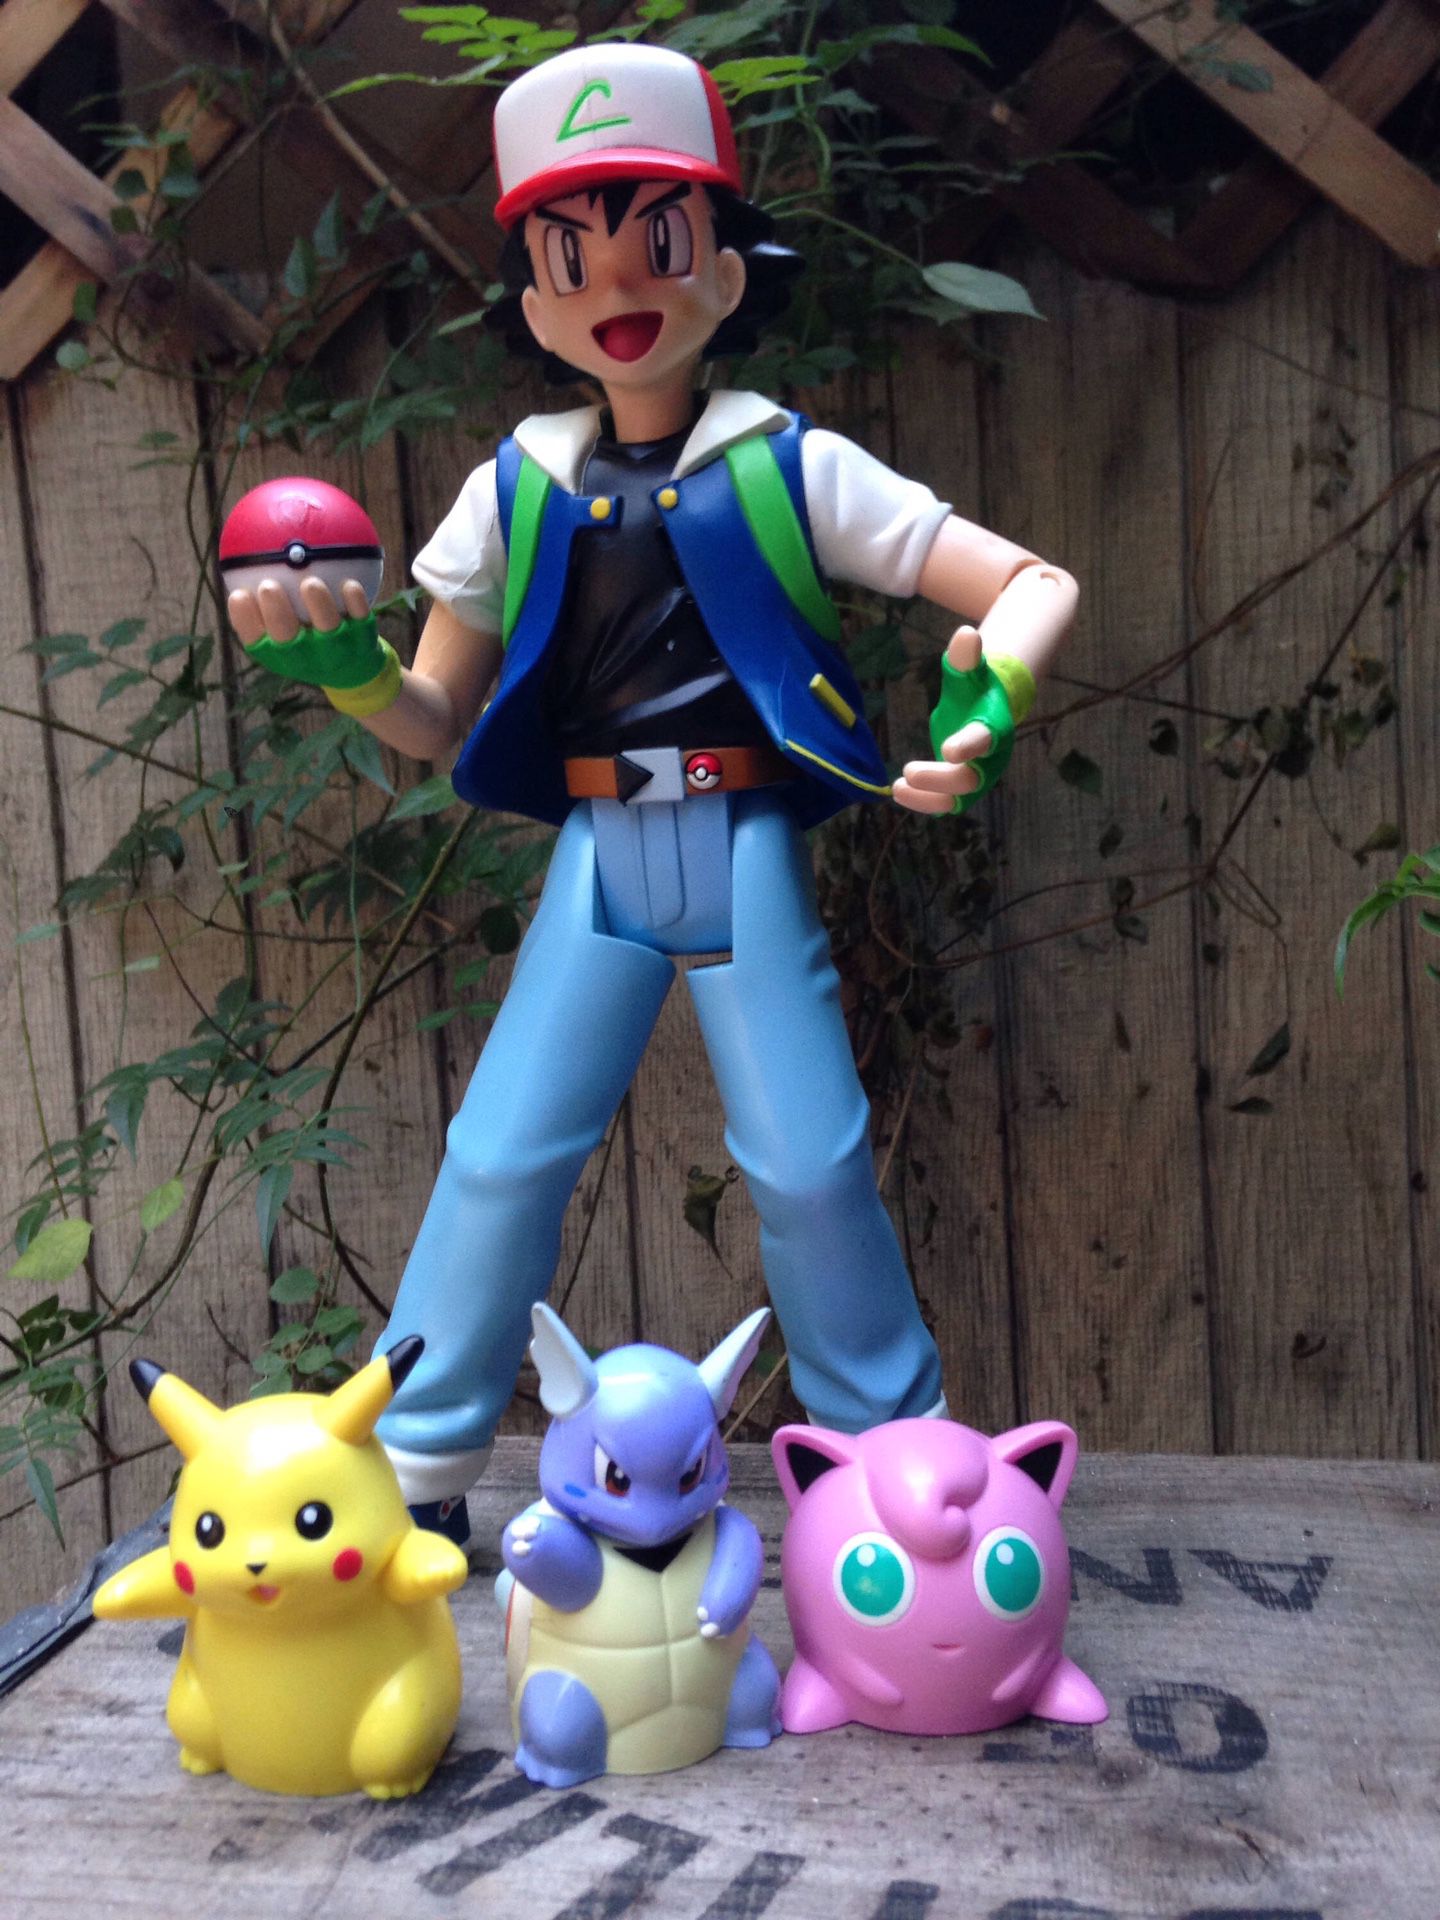 Vintage Original Nintendo Pokémon Talking Ash Action Figure with Pikachu, Wartortle and Jigglypuff